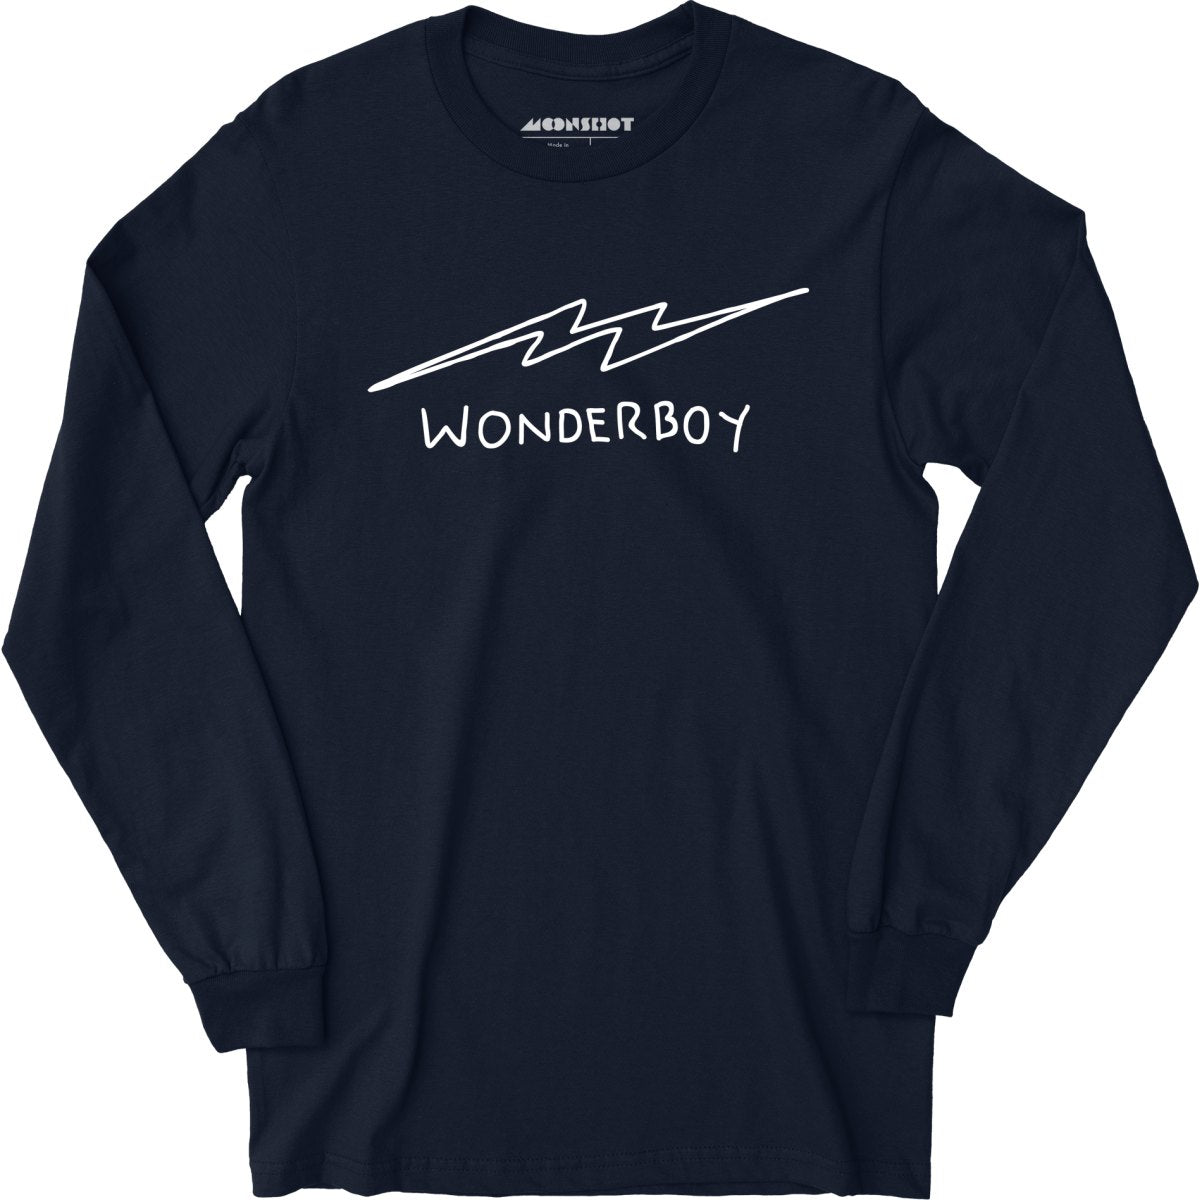 Roy Hobbs Wonderboy Bat - Long Sleeve T-Shirt